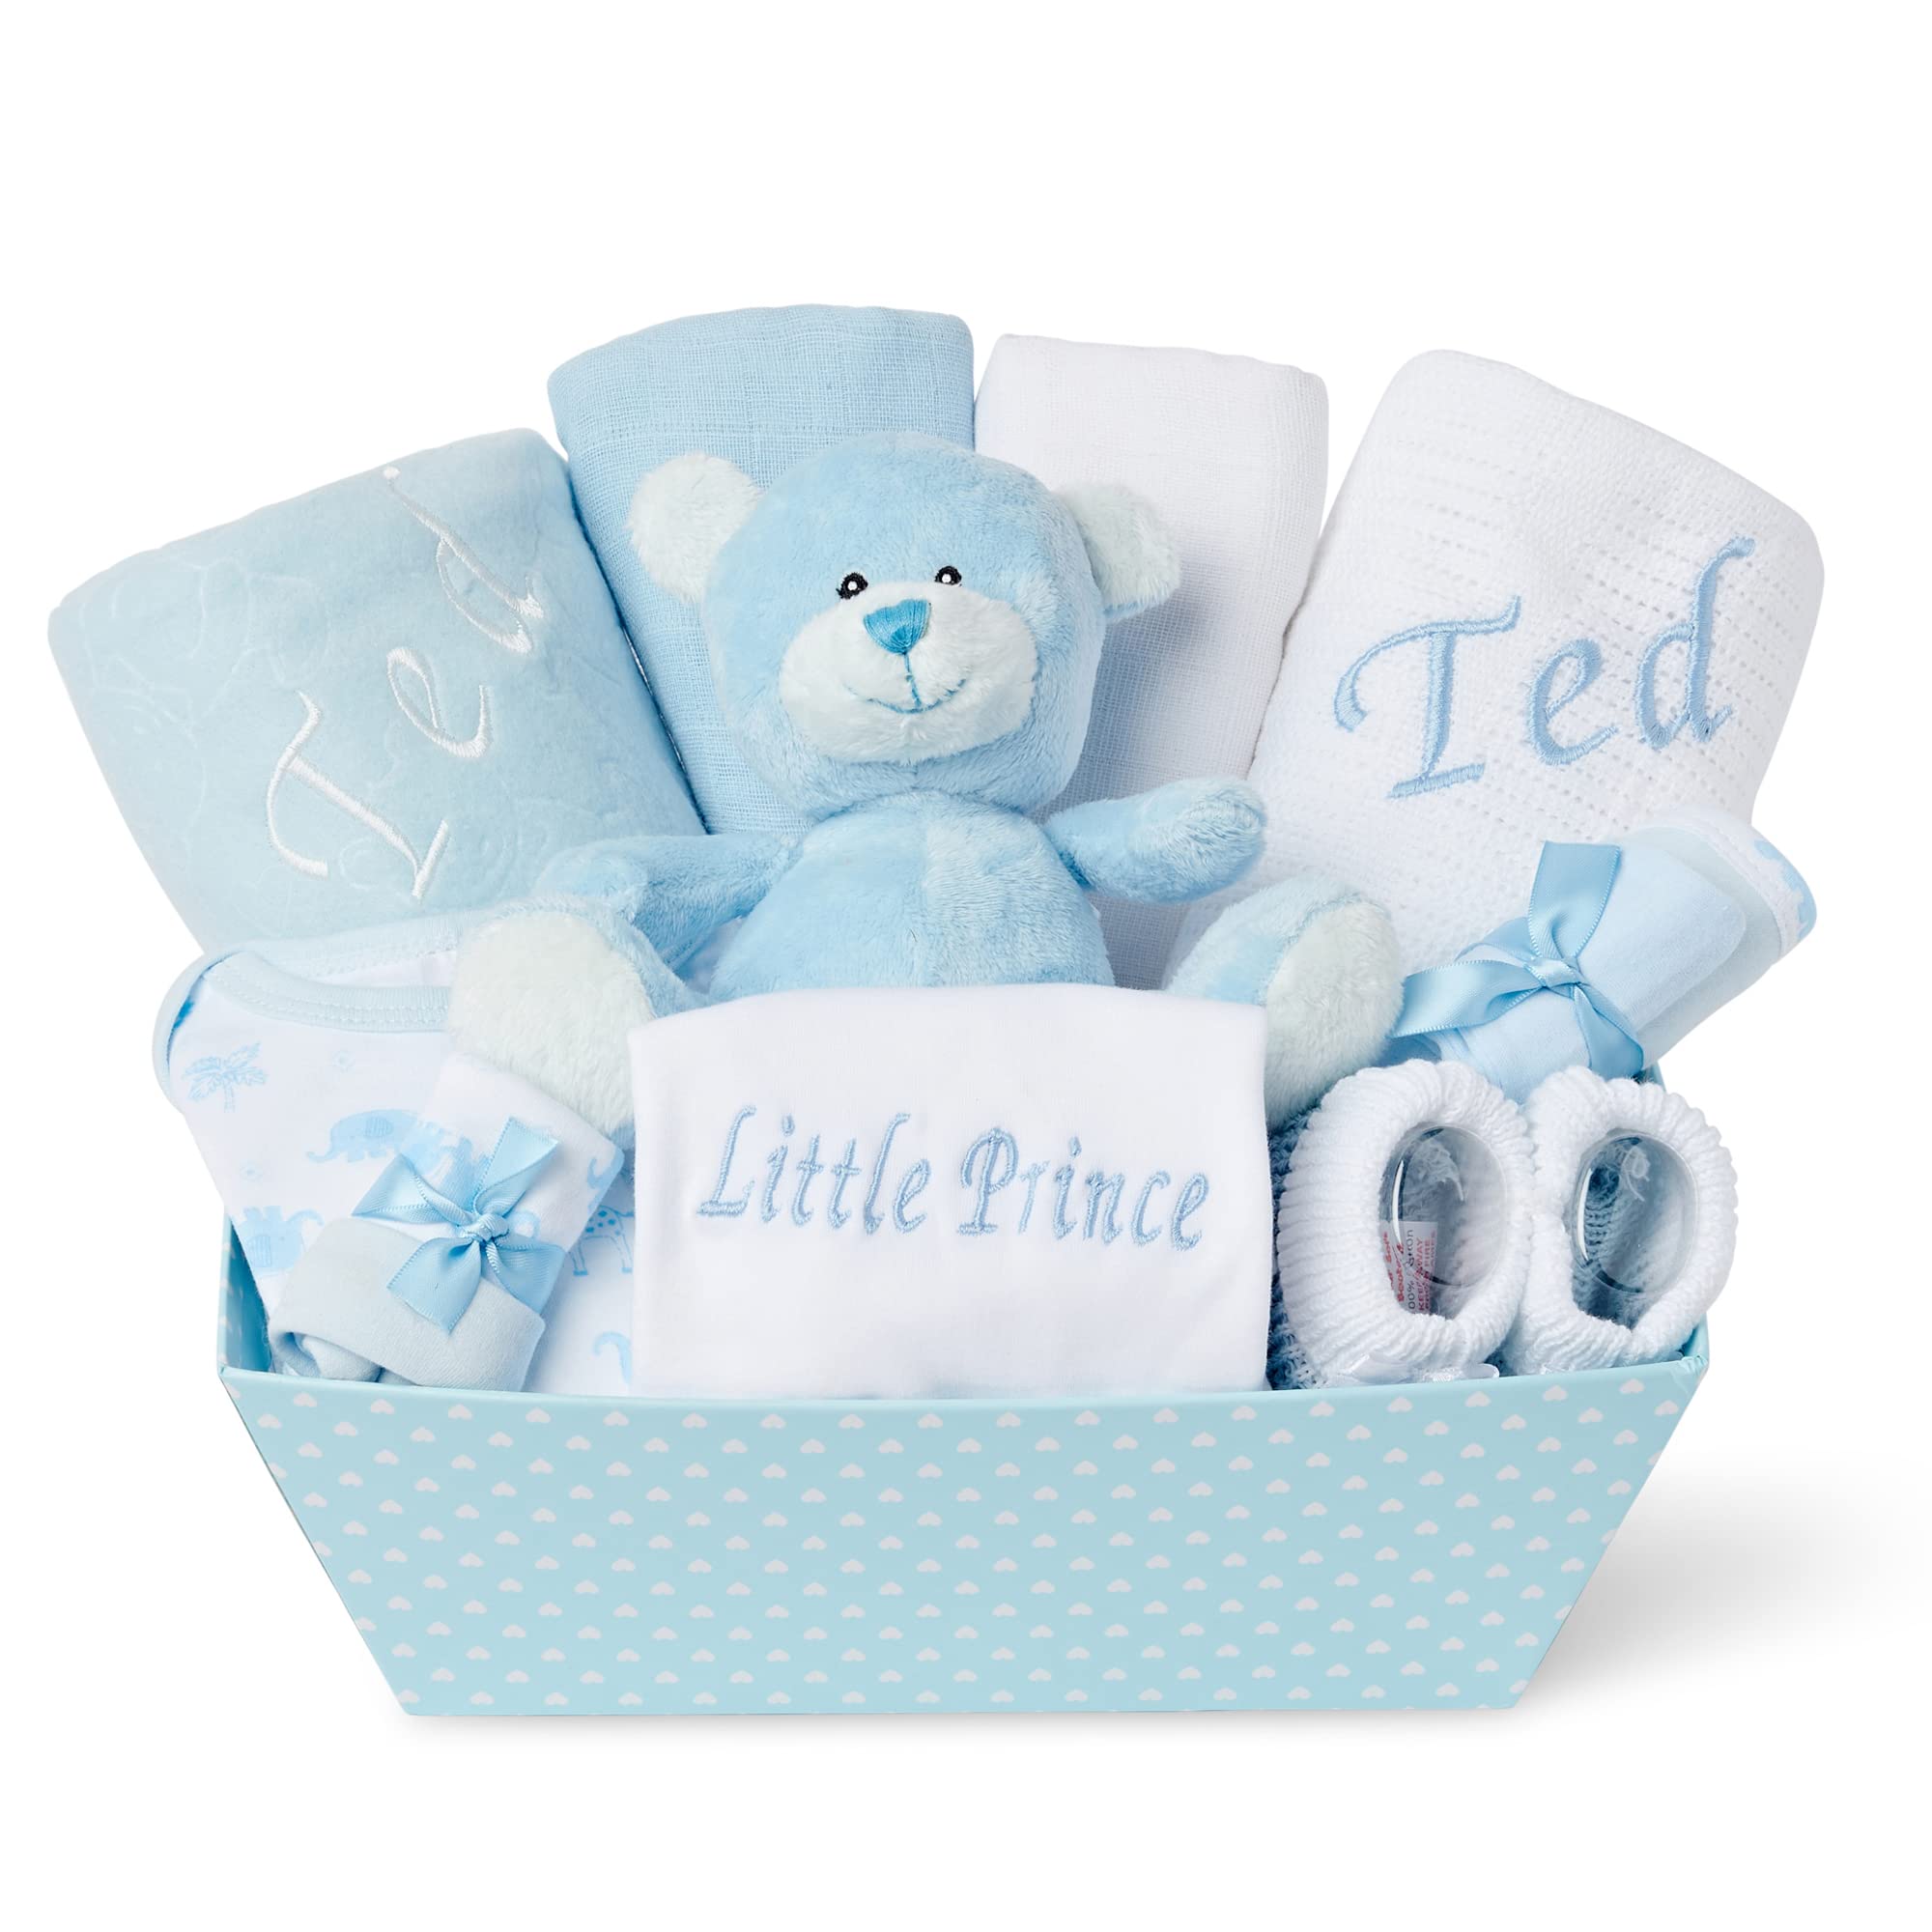 Personalised Large Baby Boy's Keepsake/ Memory Box/ New Baby Christening  Gift | eBay